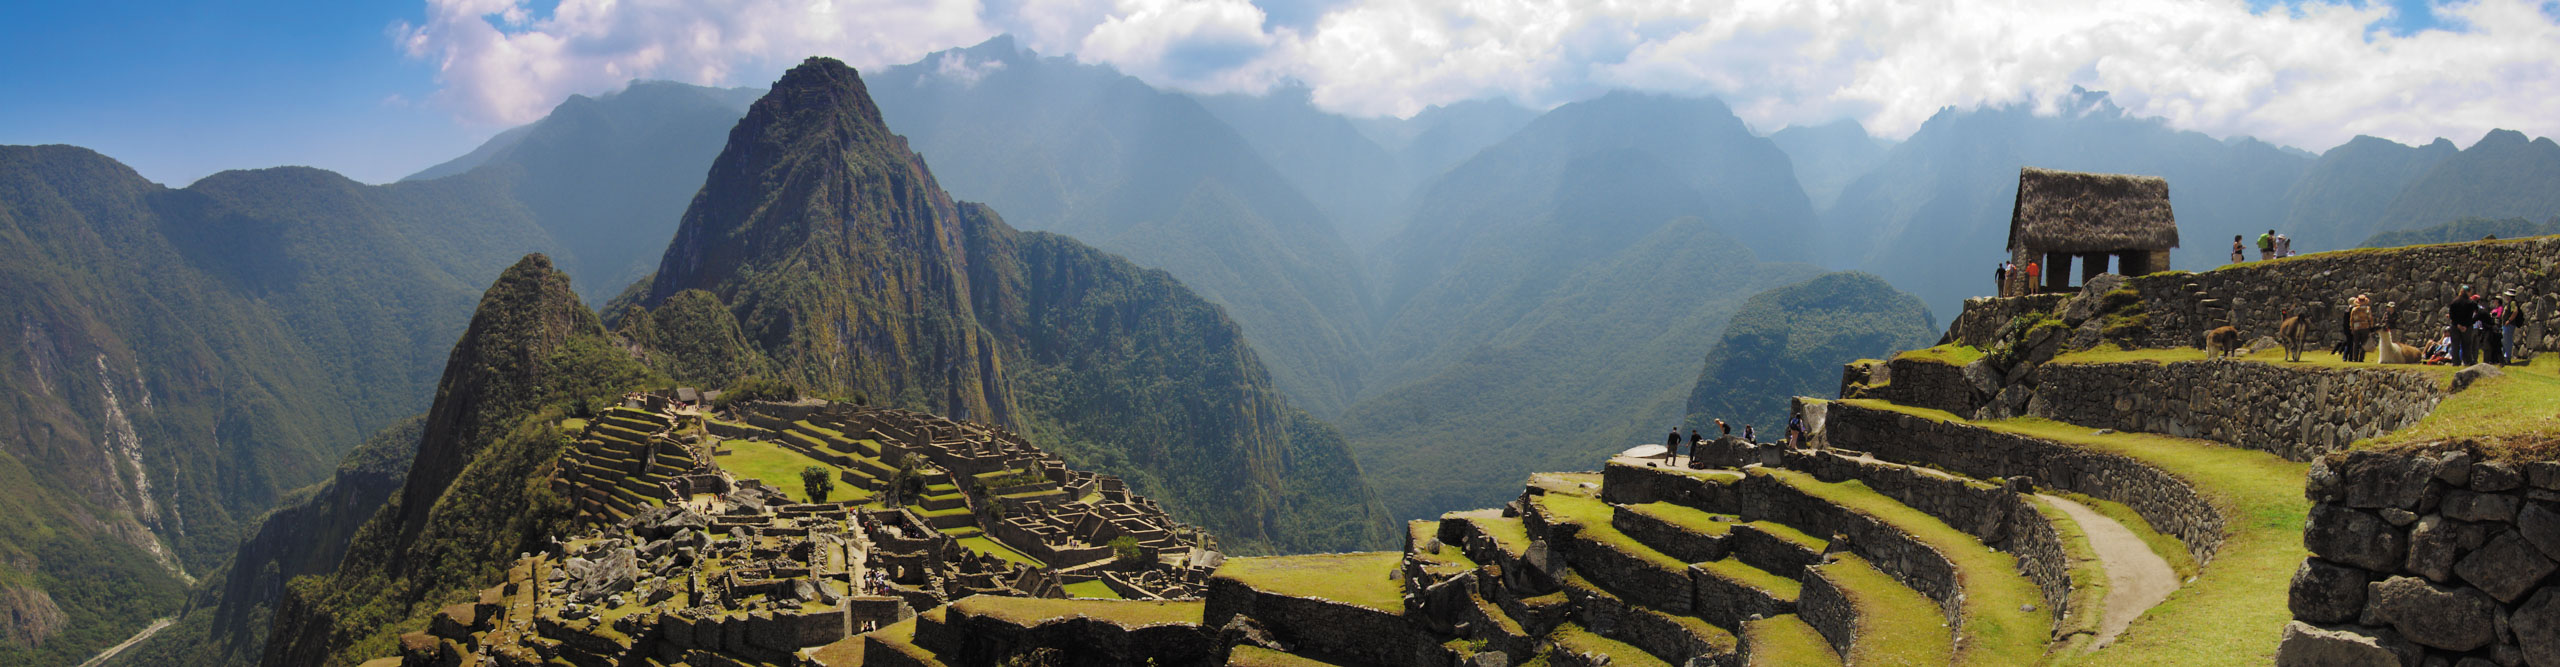 Clouds rising above the mountains behind. the ruins of Machu Picchu, in Peru